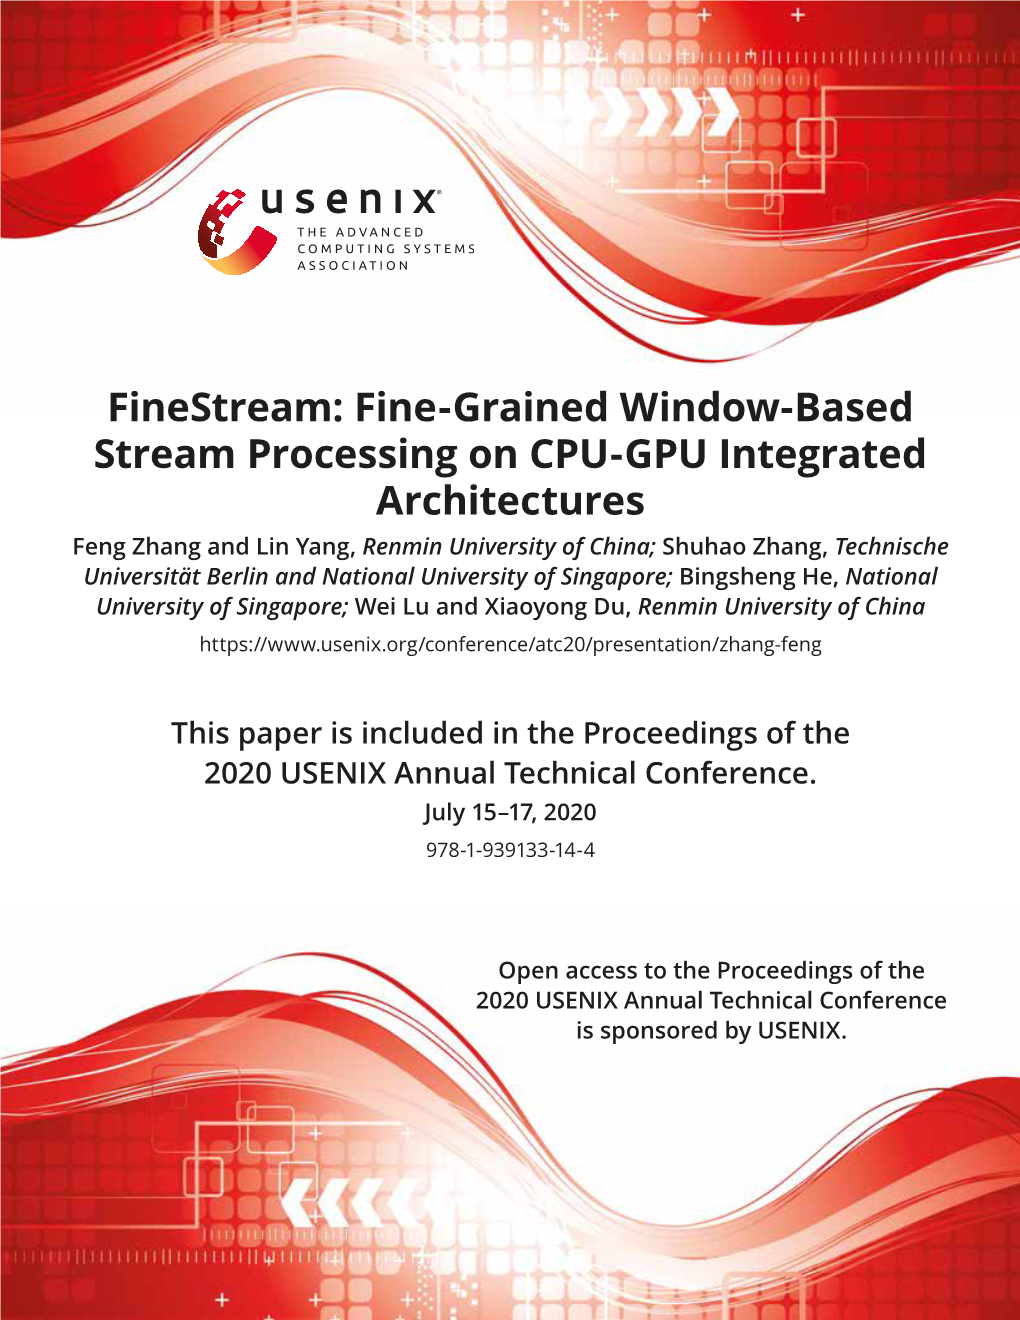 Fine-Grained Window-Based Stream Processing on CPU-GPU Integrated